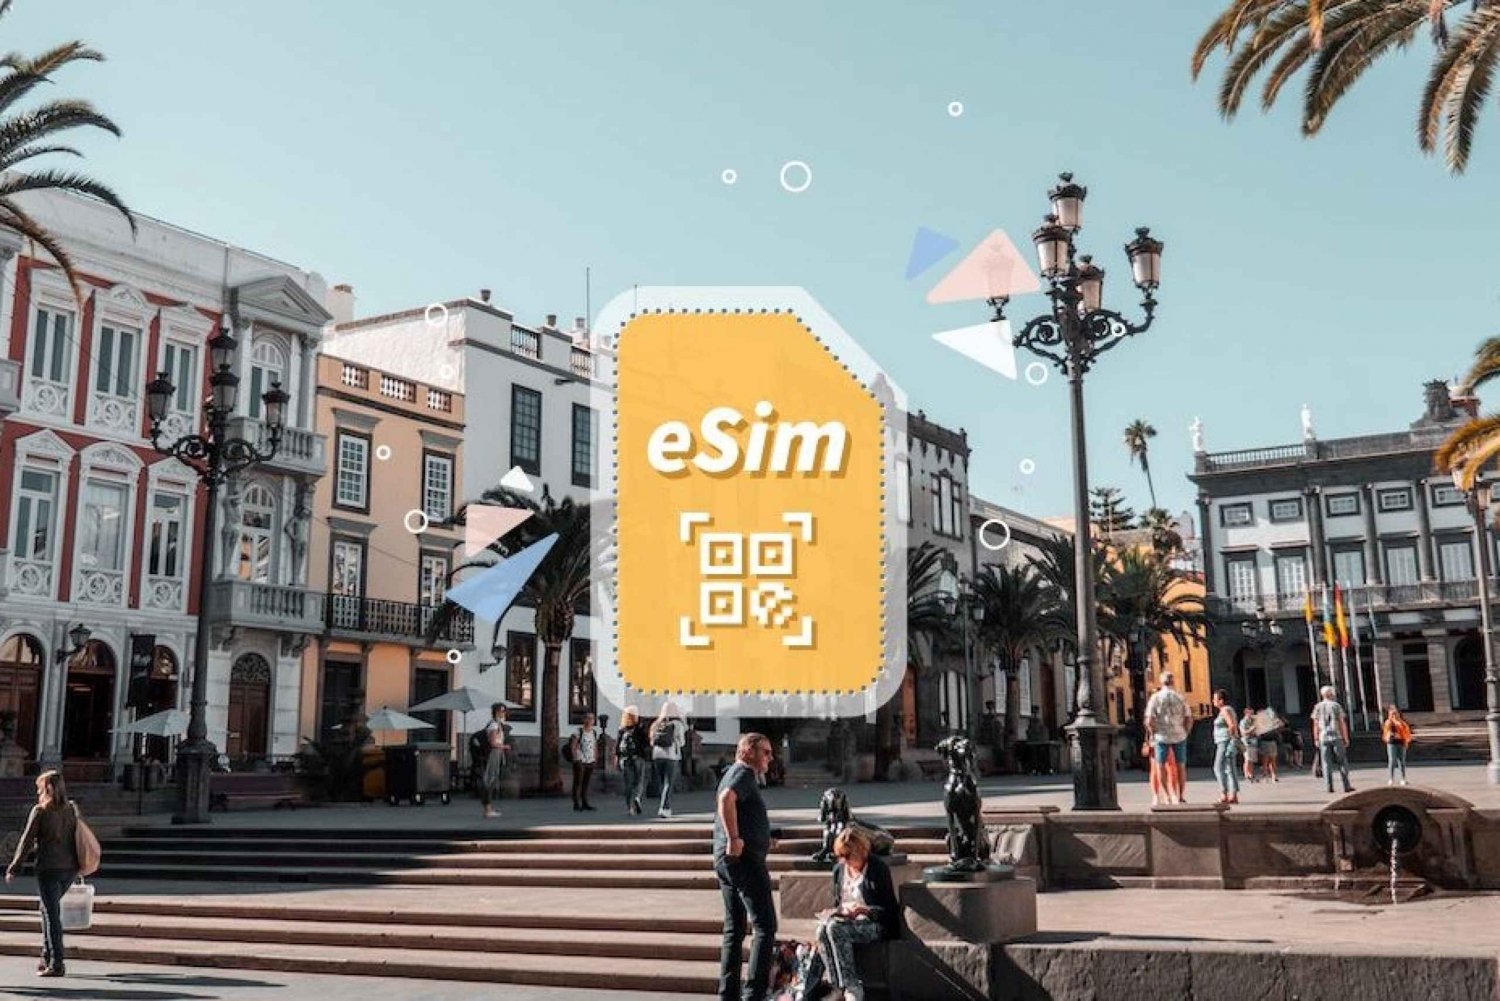 Espagne/Europe : Plan de données mobiles eSim